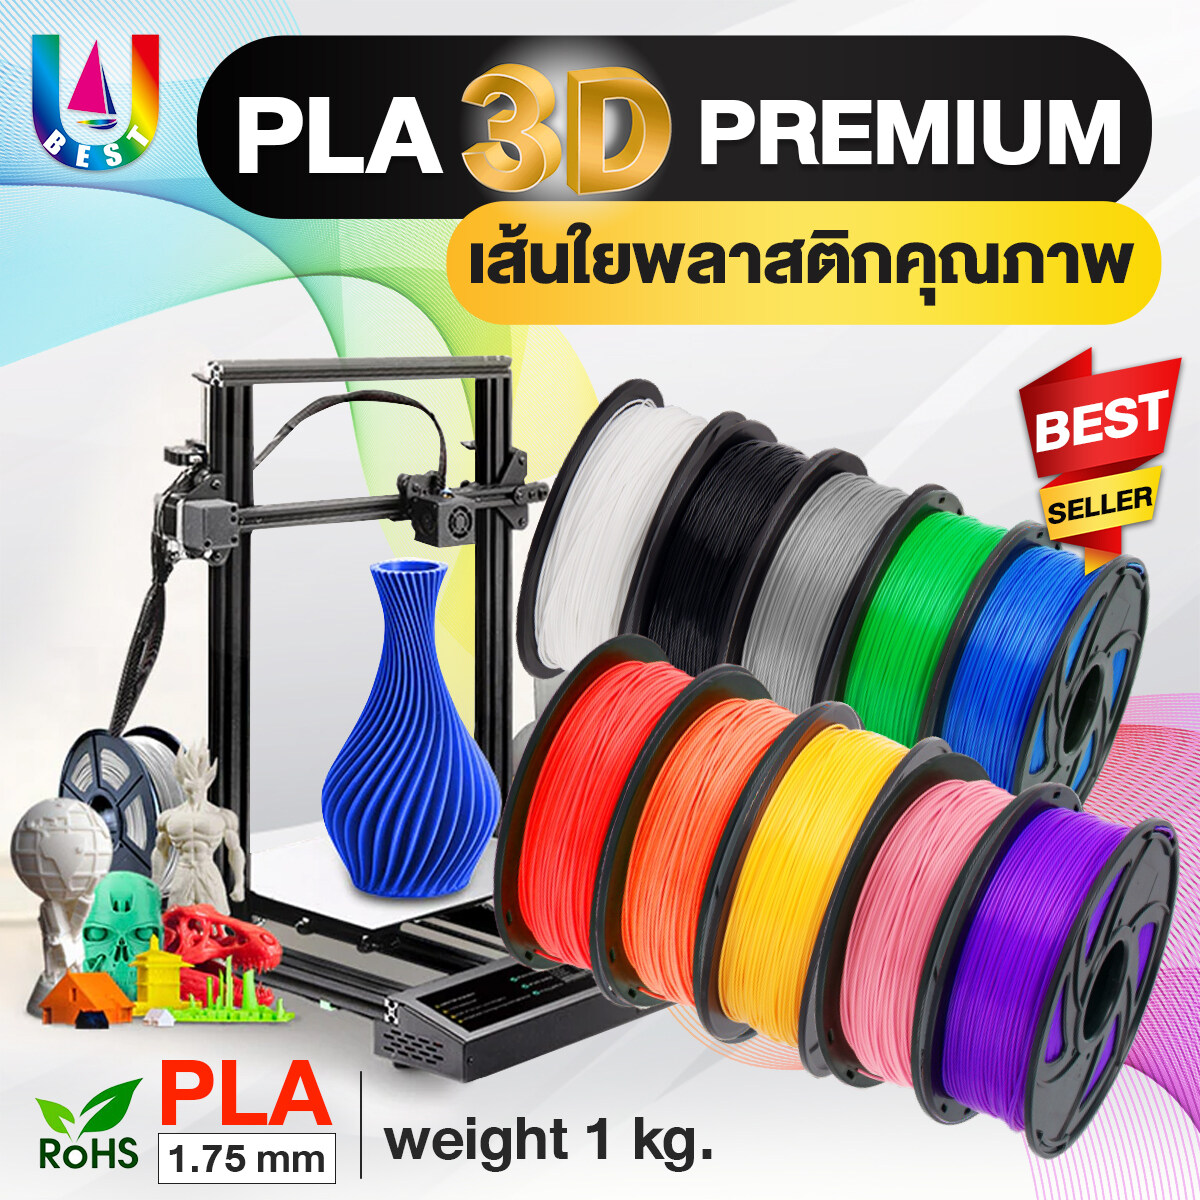 3D printer เส้นพลาสติก PLA 3D สำหรับงานพิมพ์ 3 มิติ filament 1.75 mm. 1 kg. สำหรับ เครื่องพิมพ์ 3d ใยพลาสติก/เส้นใยพลาสติก PLA Filament/3d printer filament pla